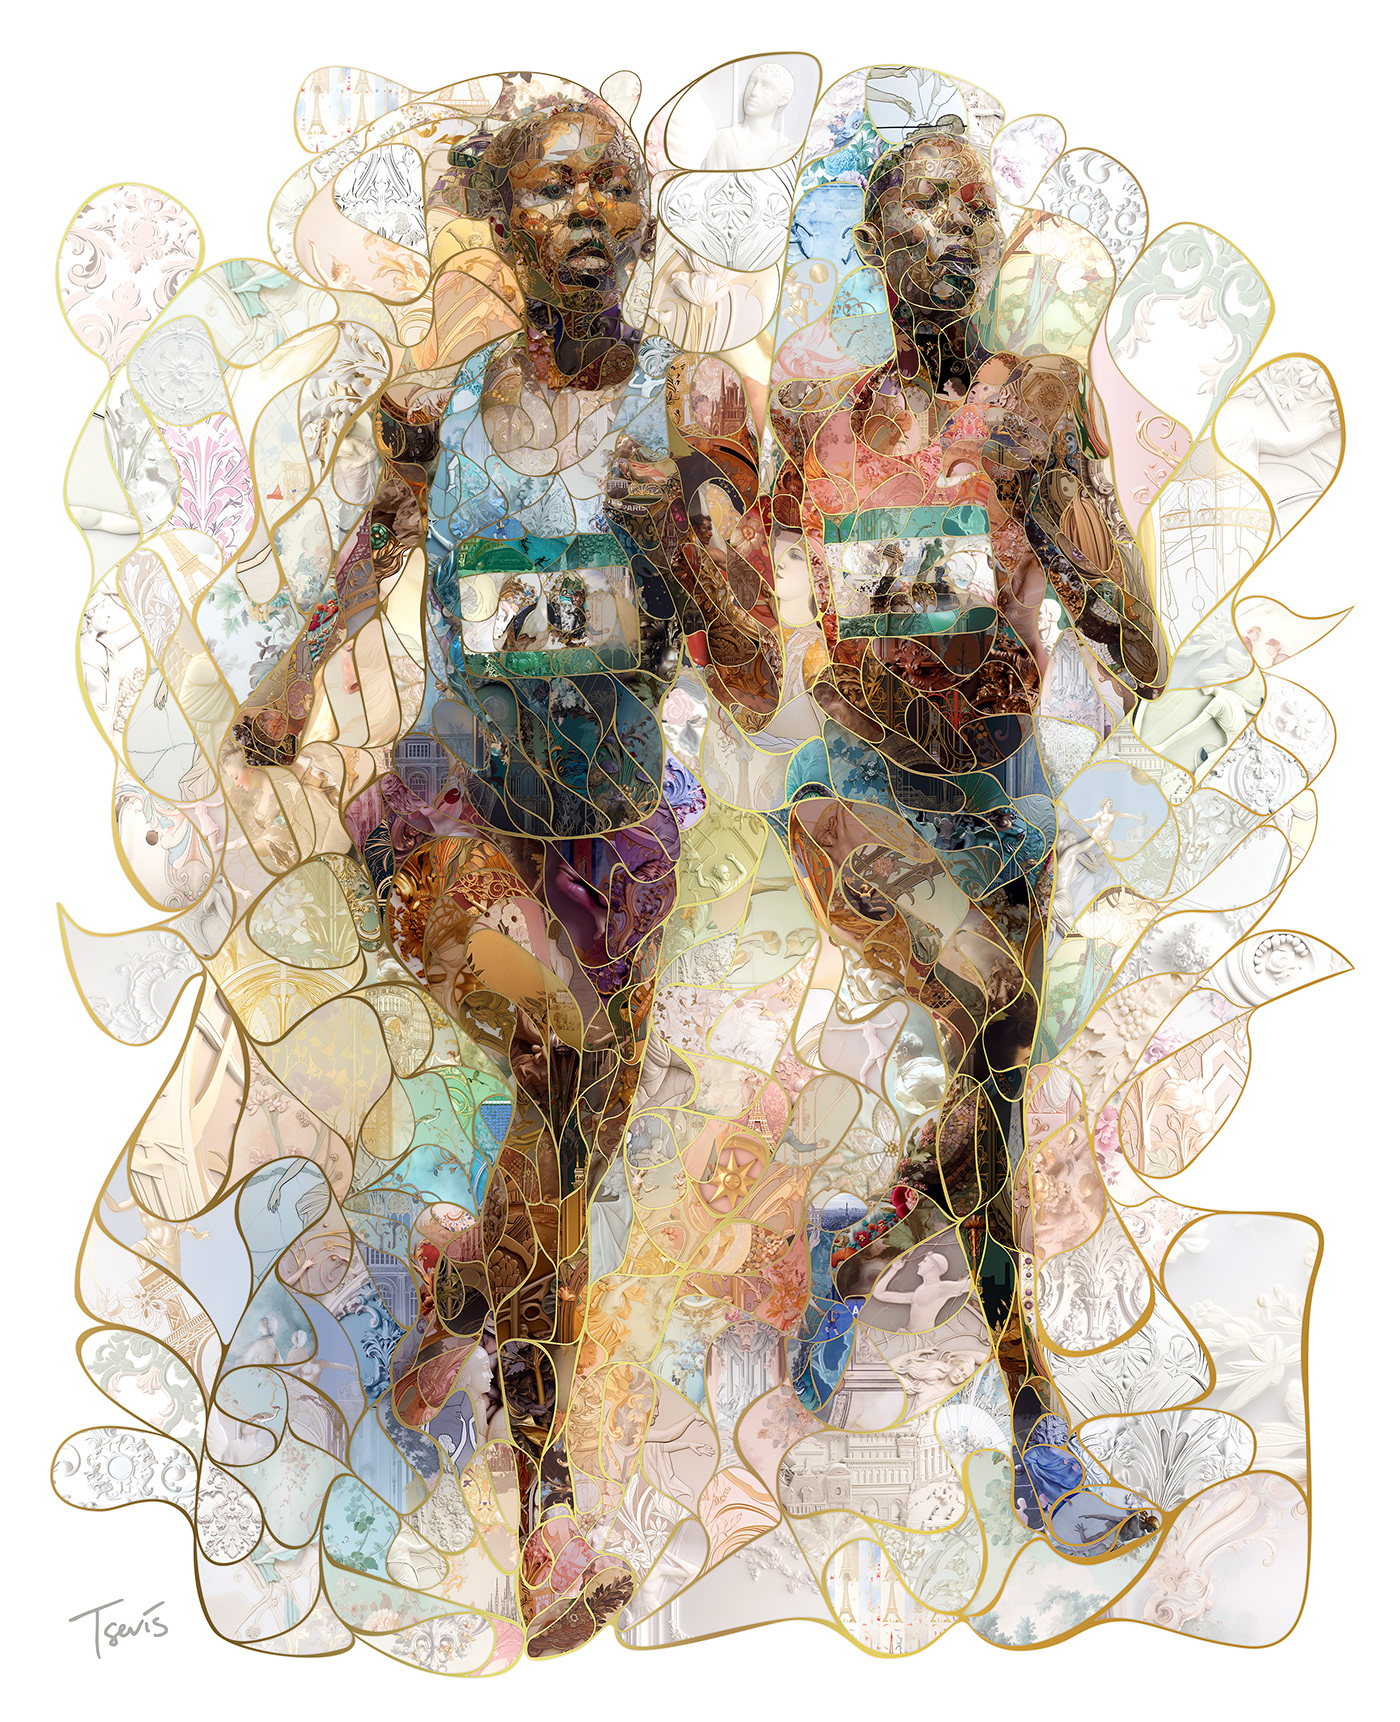 photocollage collage paris2024 photomosaic VisualDesign sport design Olympics sports graphics Digital Illustrations French Culture